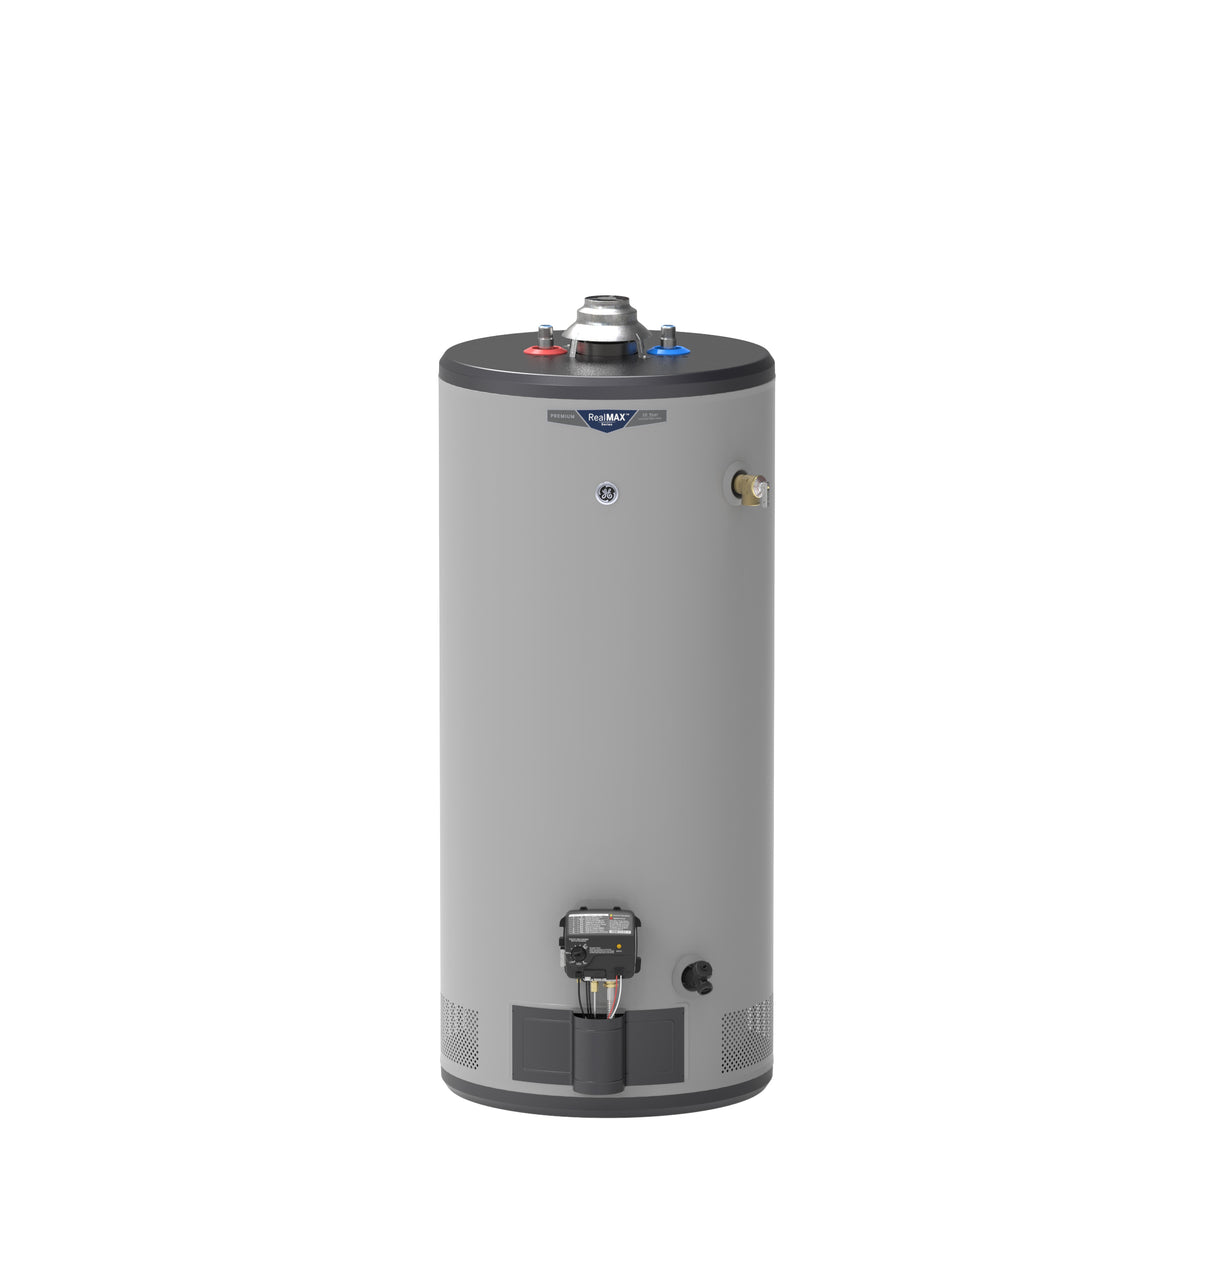 GE RealMAX Premium 40-Gallon Short Natural Gas Atmospheric Water Heater - (GG40S10BXR)